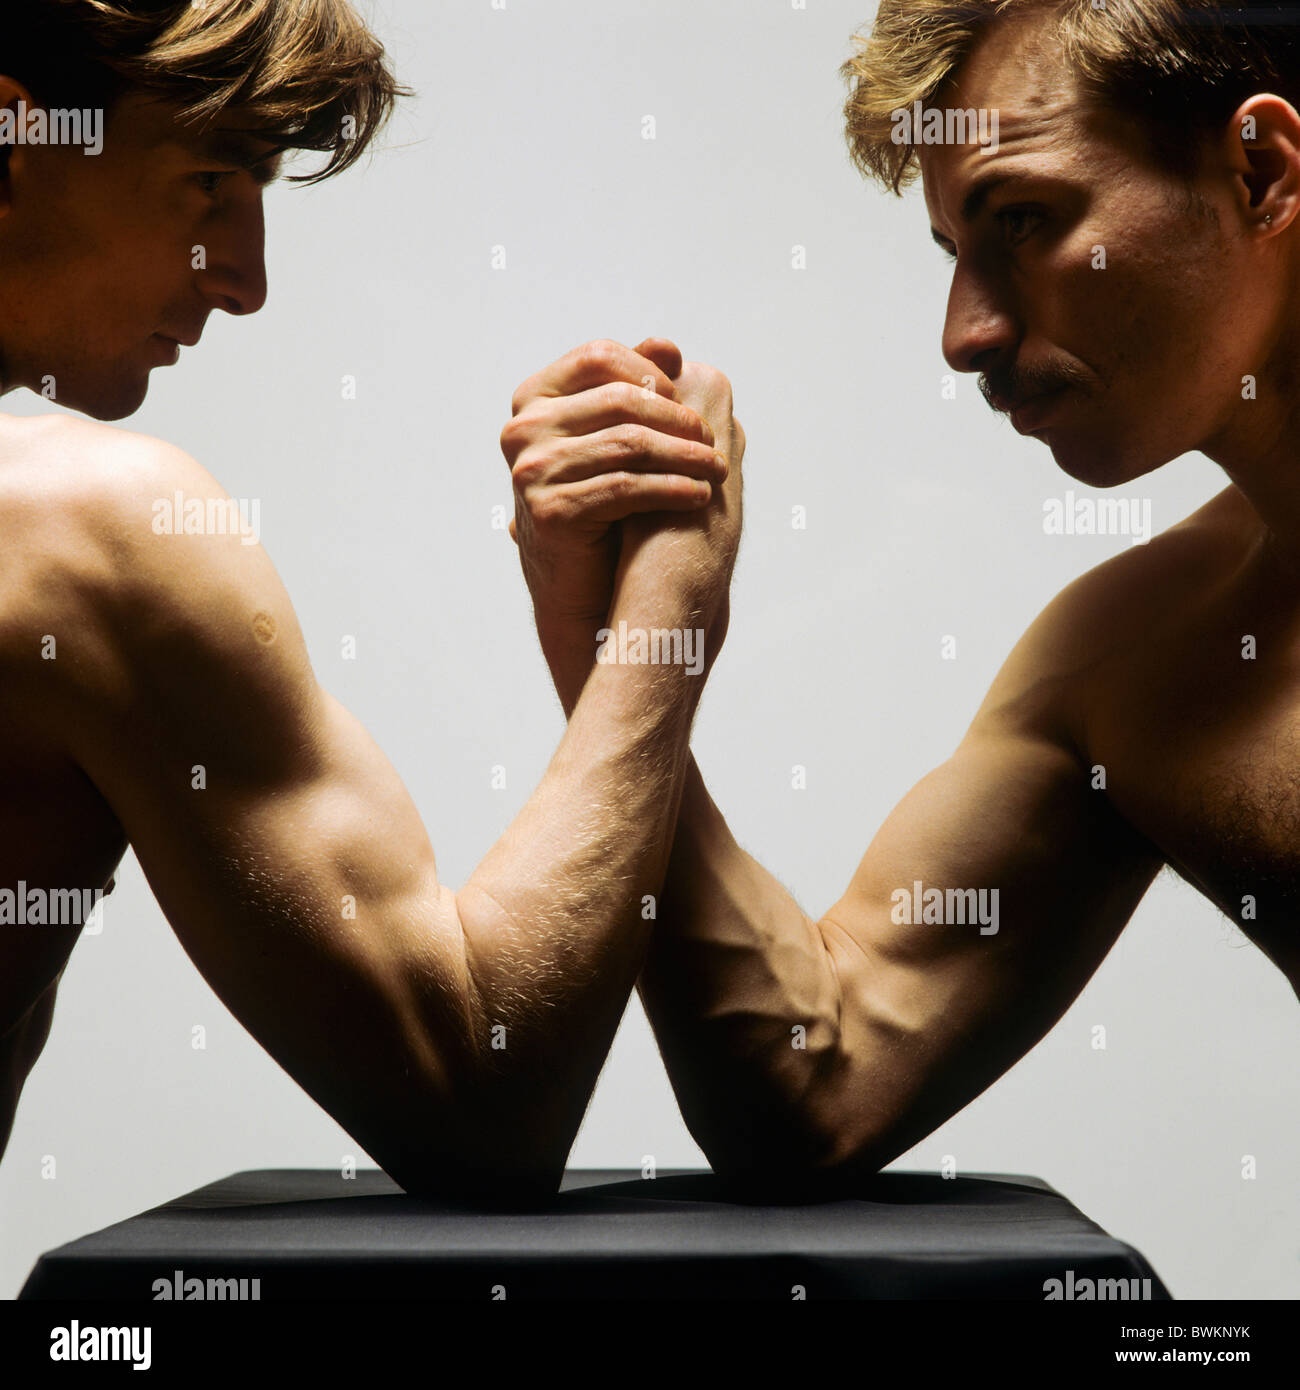 TWO MEN ARM WRESTLING Stock Photo